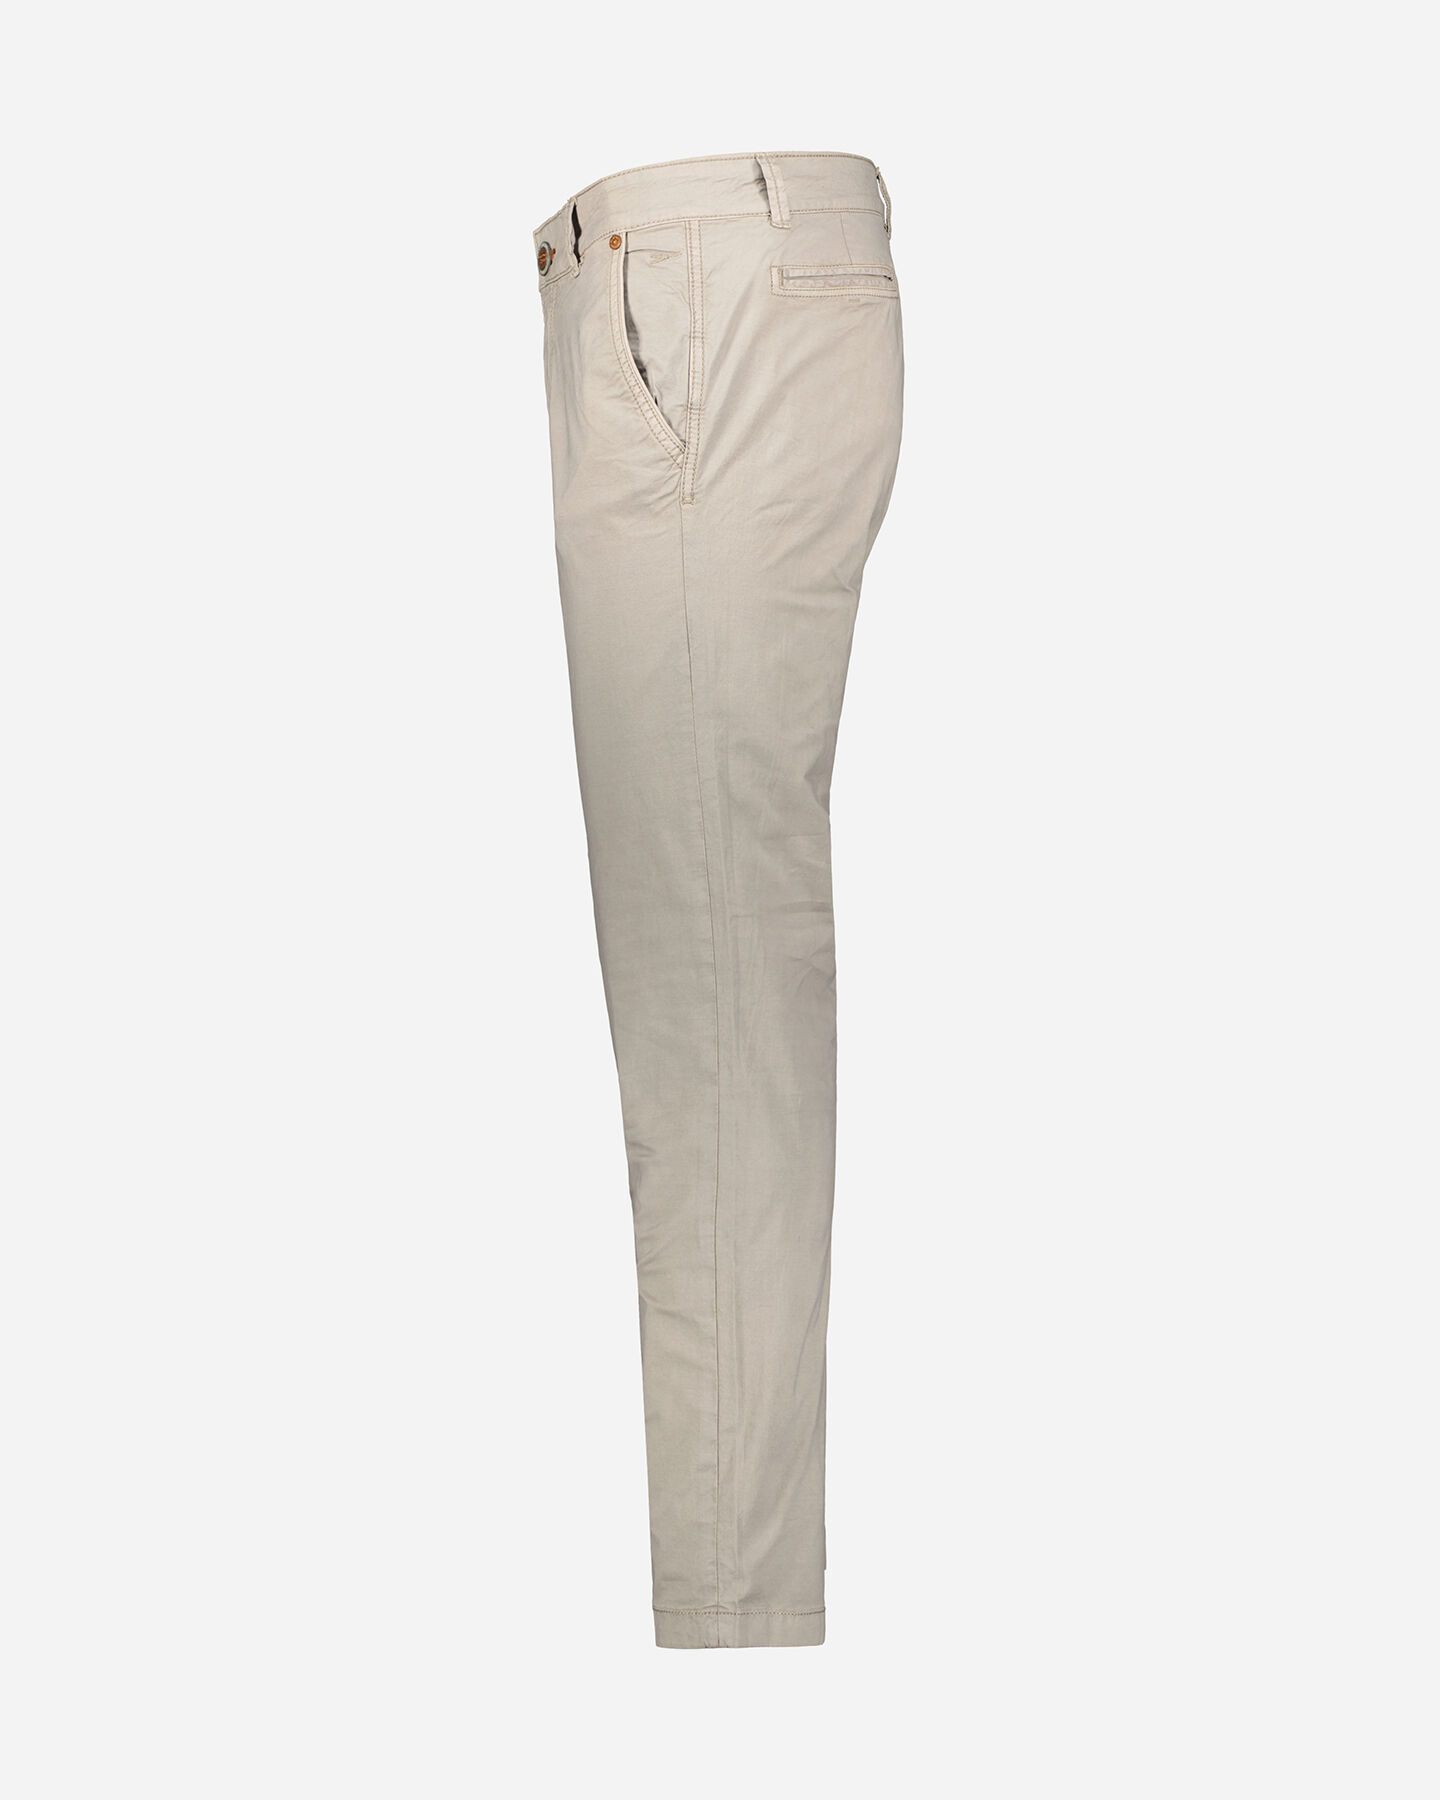  Pantalone COTTON BELT SMITH M S4121188|903|30 scatto 1